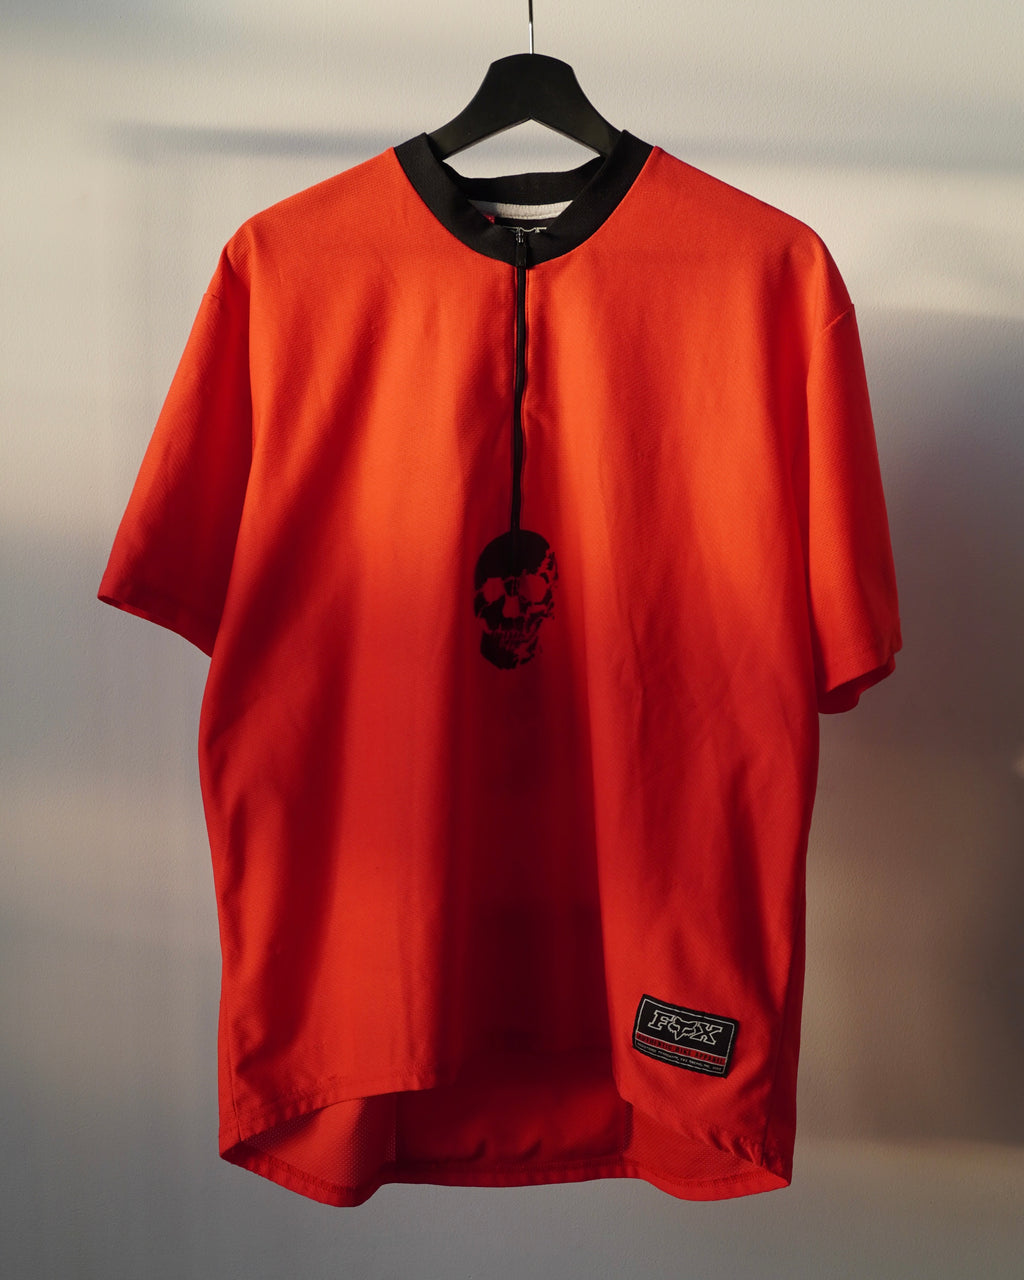 WSL Customized Vintage Red Foxxx Zipper Club Cycling Shirt